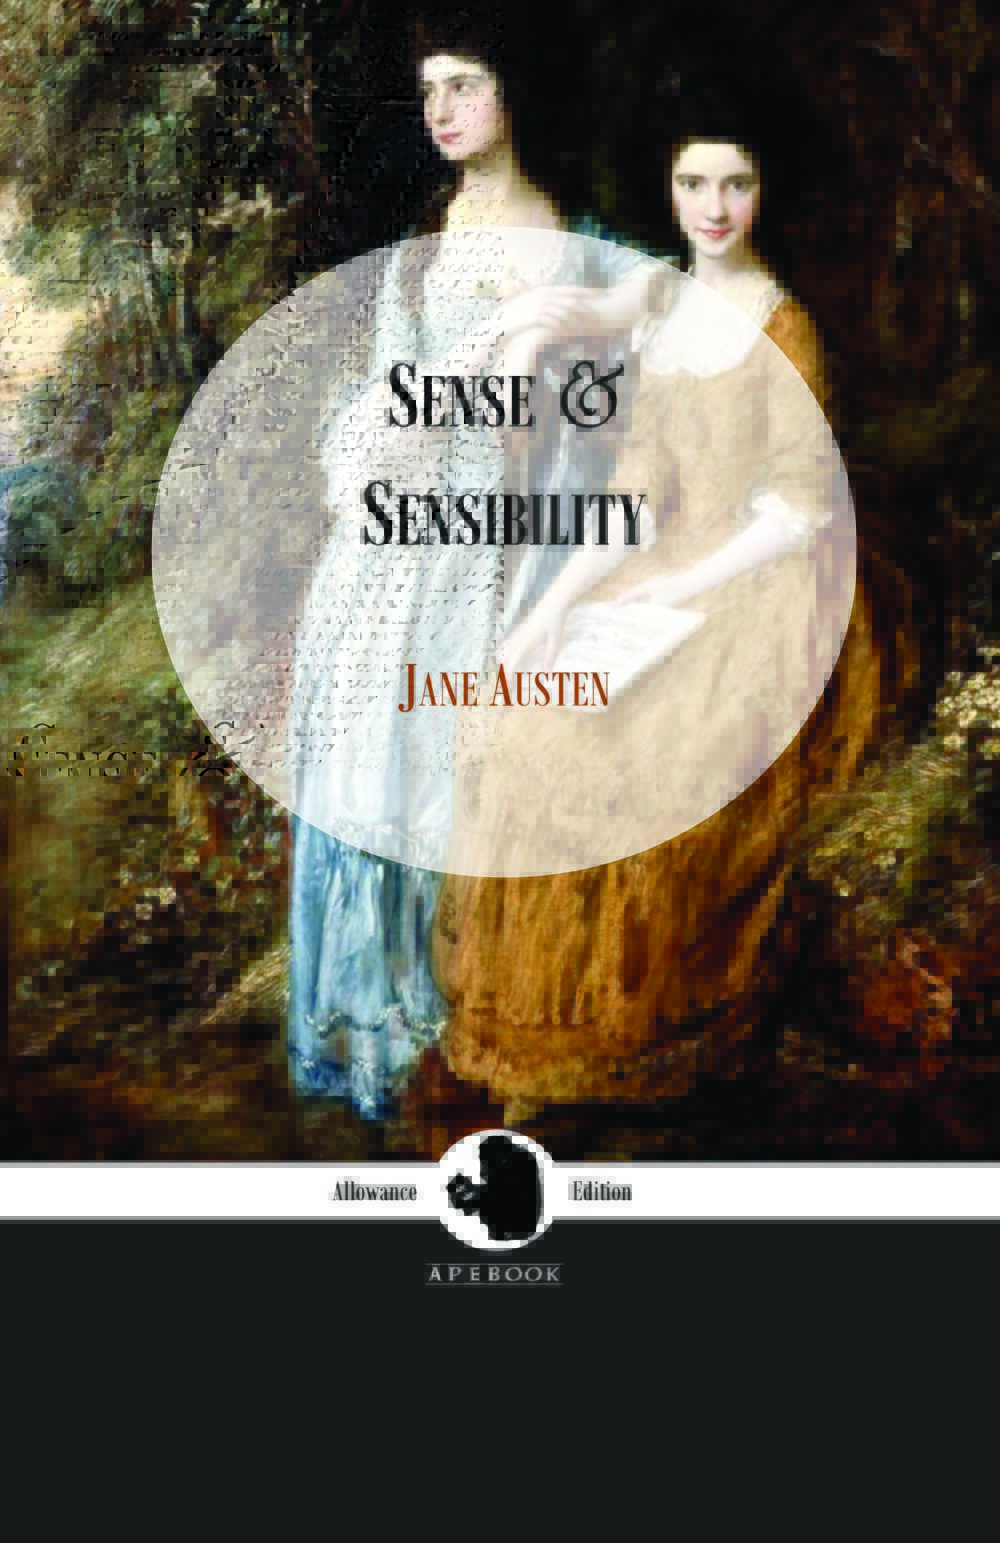 Jane Austen: Sense and Sensibility (Allowance Edition)